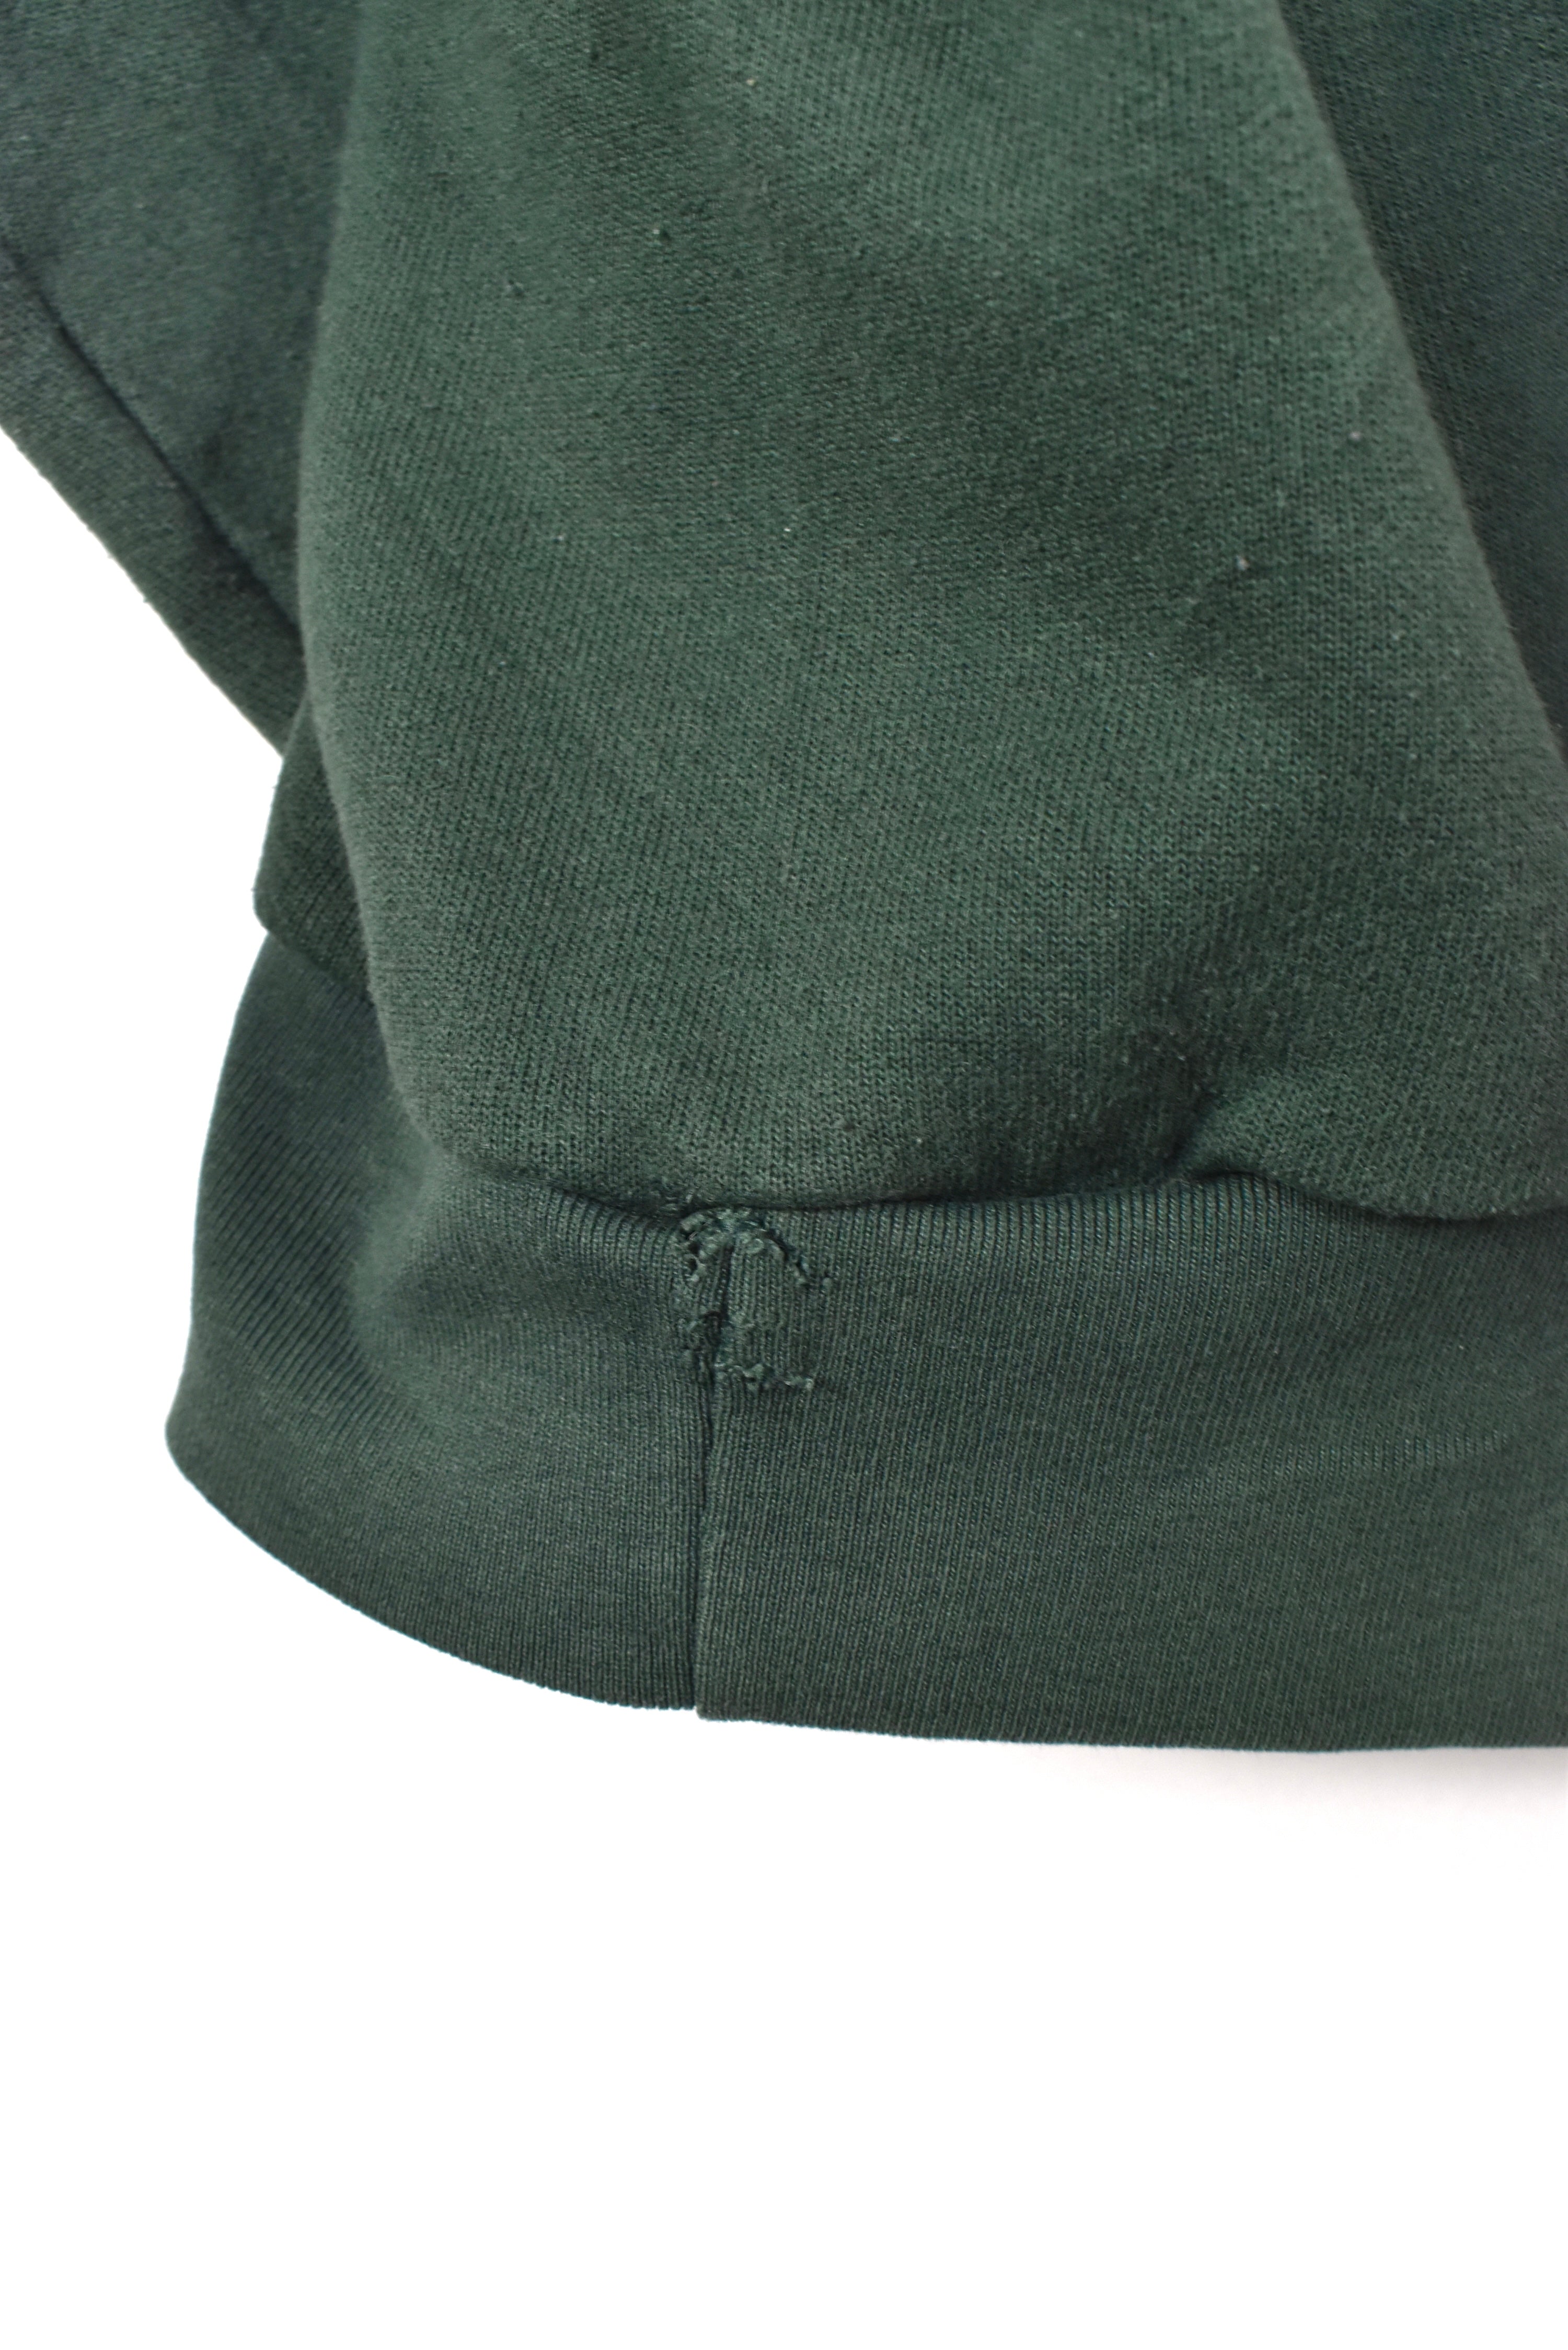 Vintage Green Bay Packers sweatshirt, NFL green embroidered crewneck - AU XL PRO SPORT